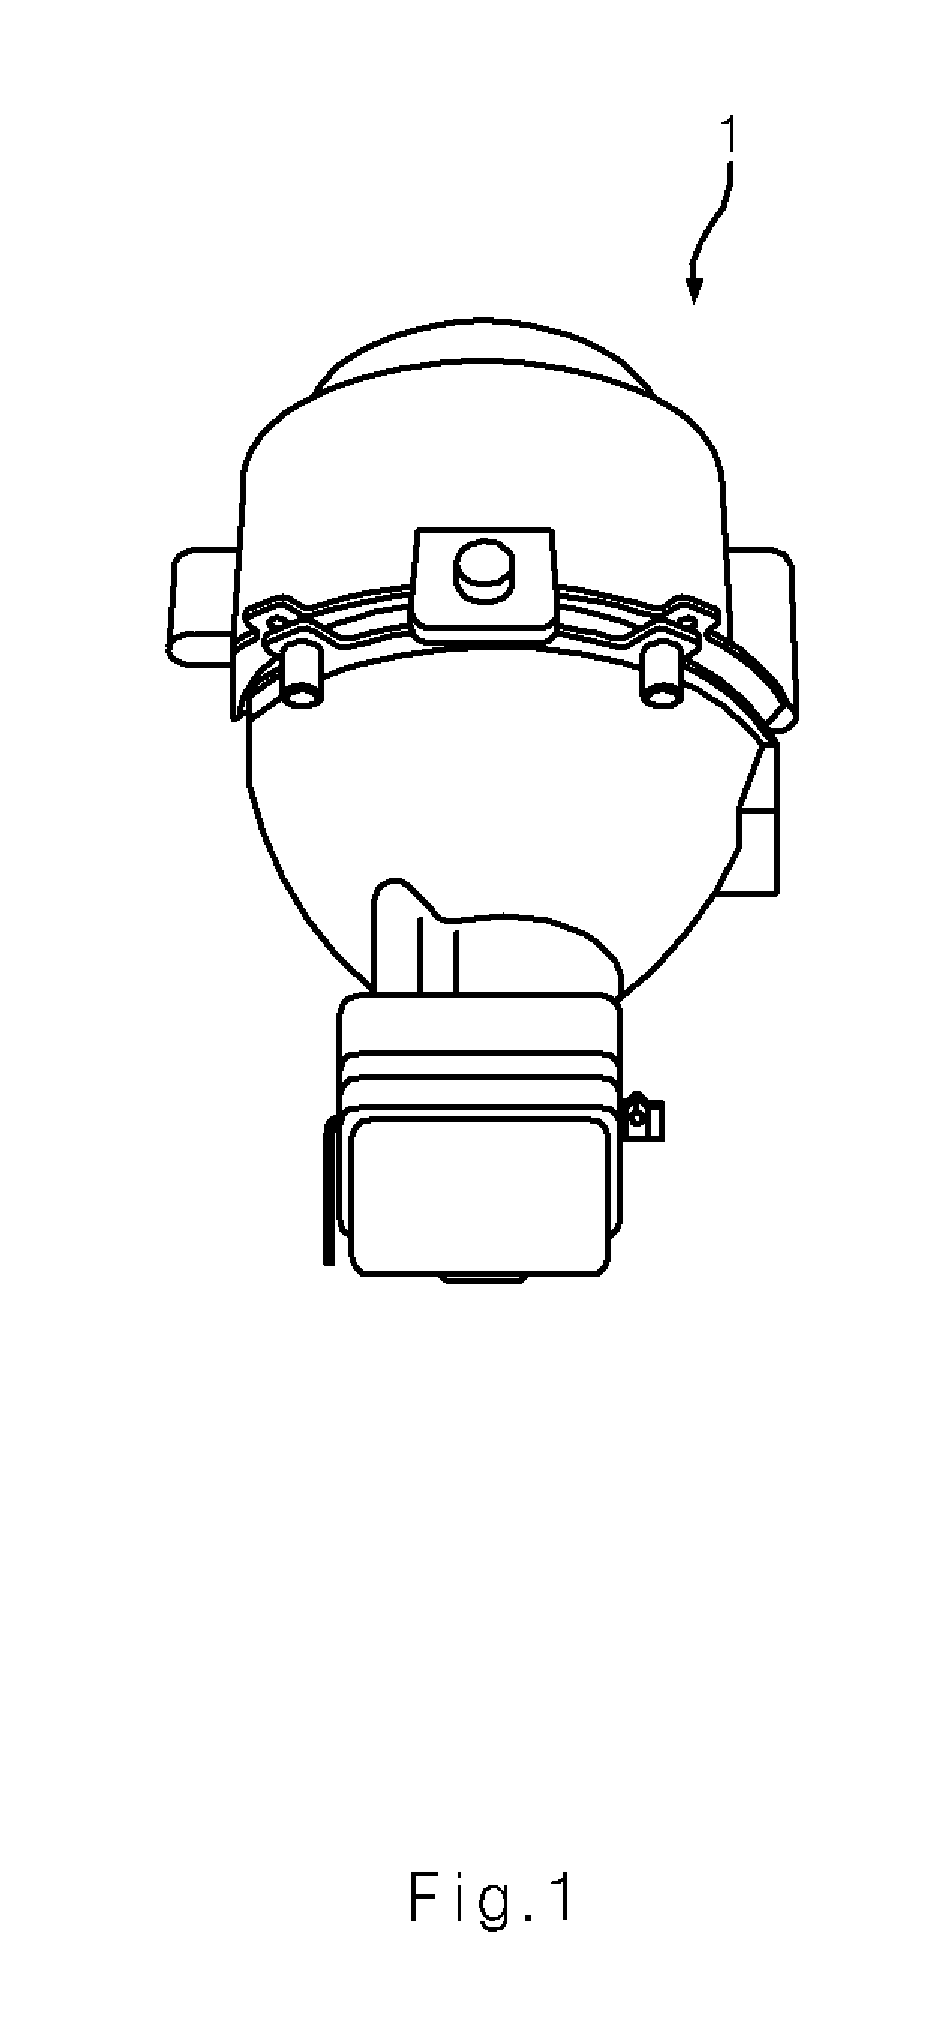 Method of controlling adaptive headlamp